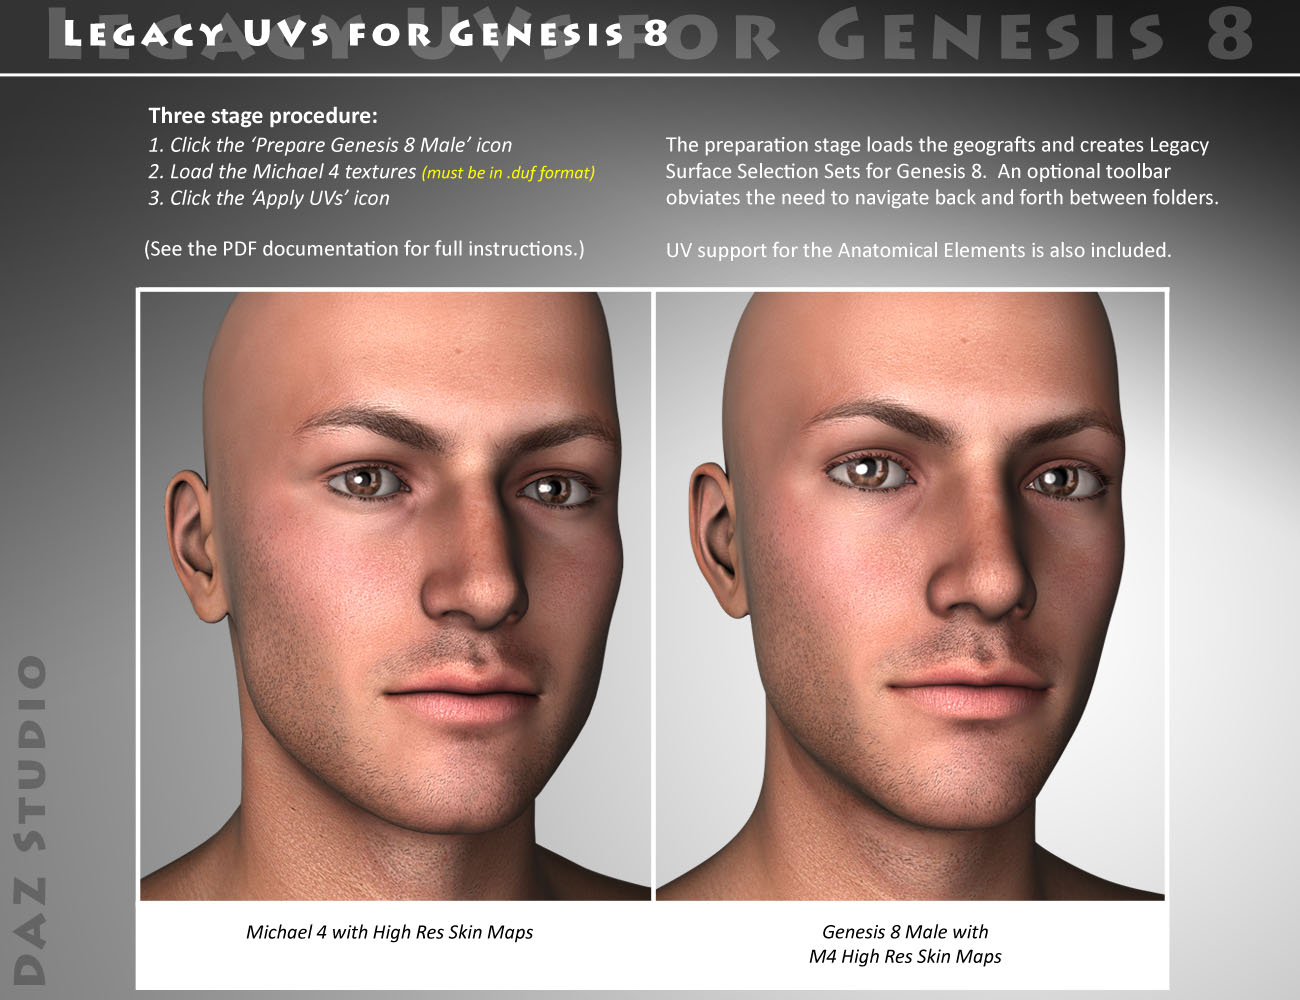 Legacy UVs for Genesis 8: Michael 4 by: Cayman Studios, 3D Models by Daz 3D